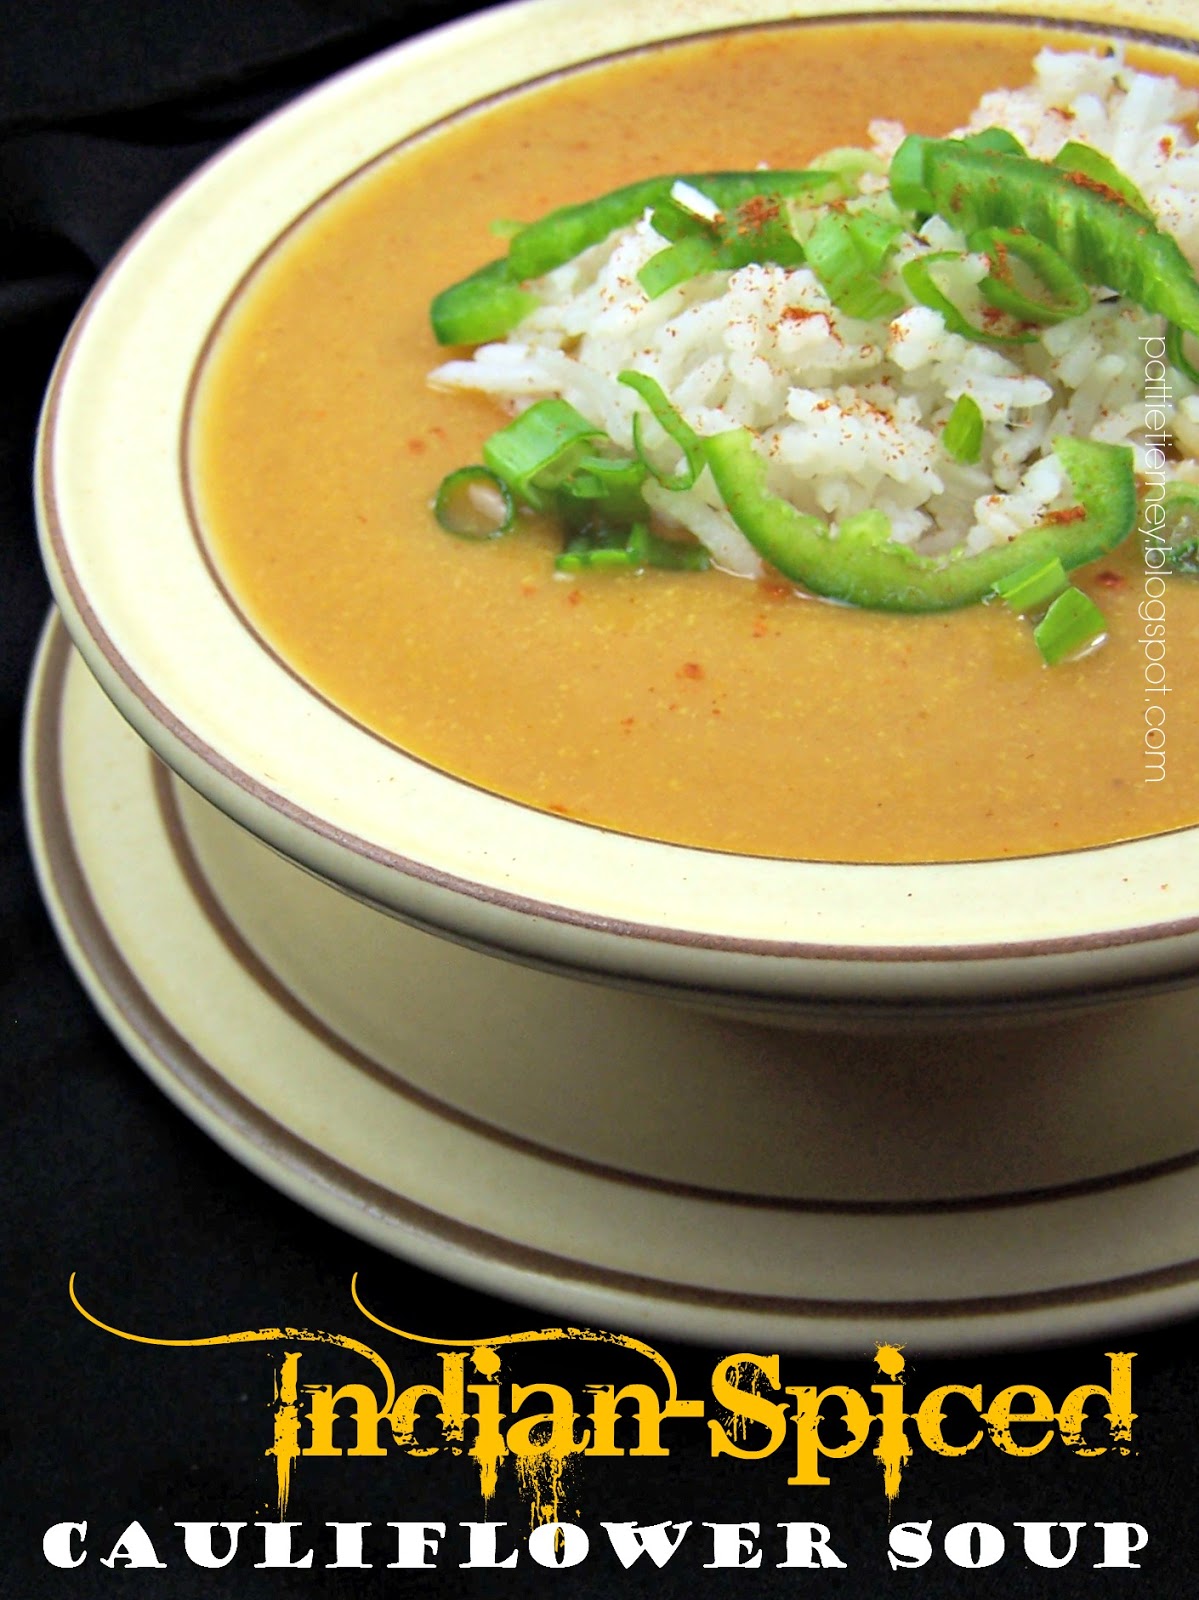 Olla-Podrida: Indian-Spiced Cauliflower Soup